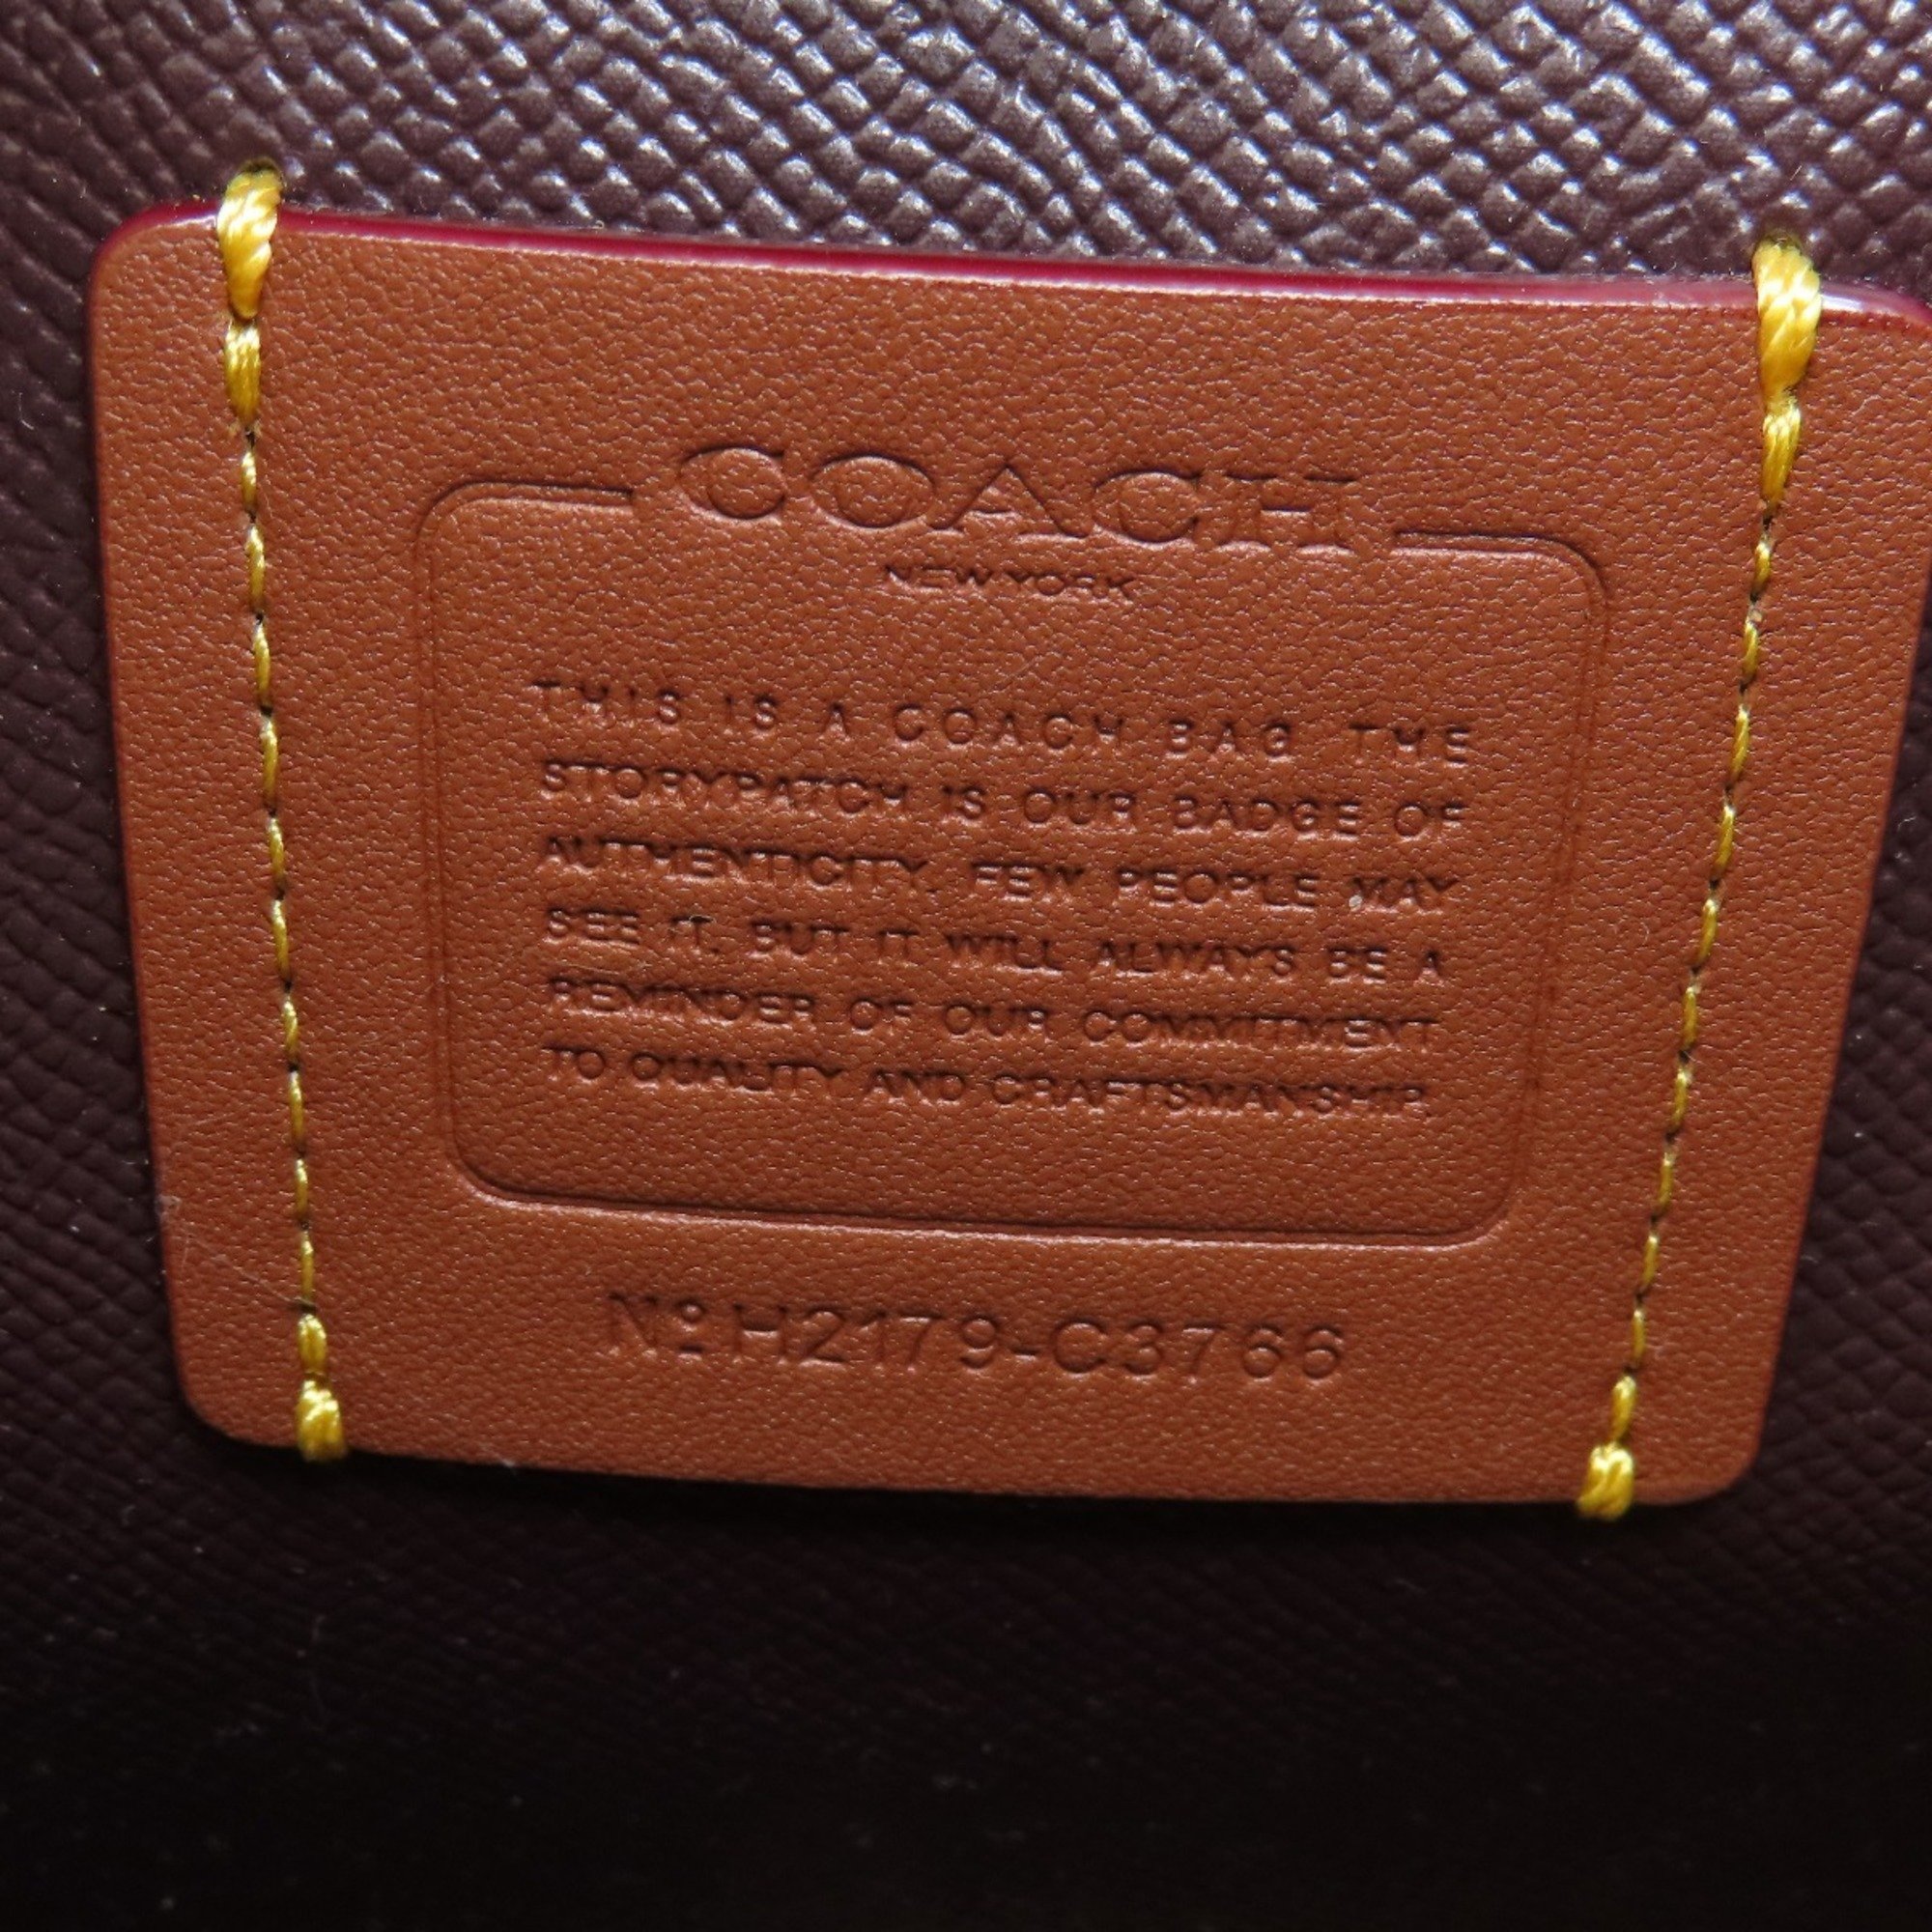 Coach C3766 handbag leather ladies